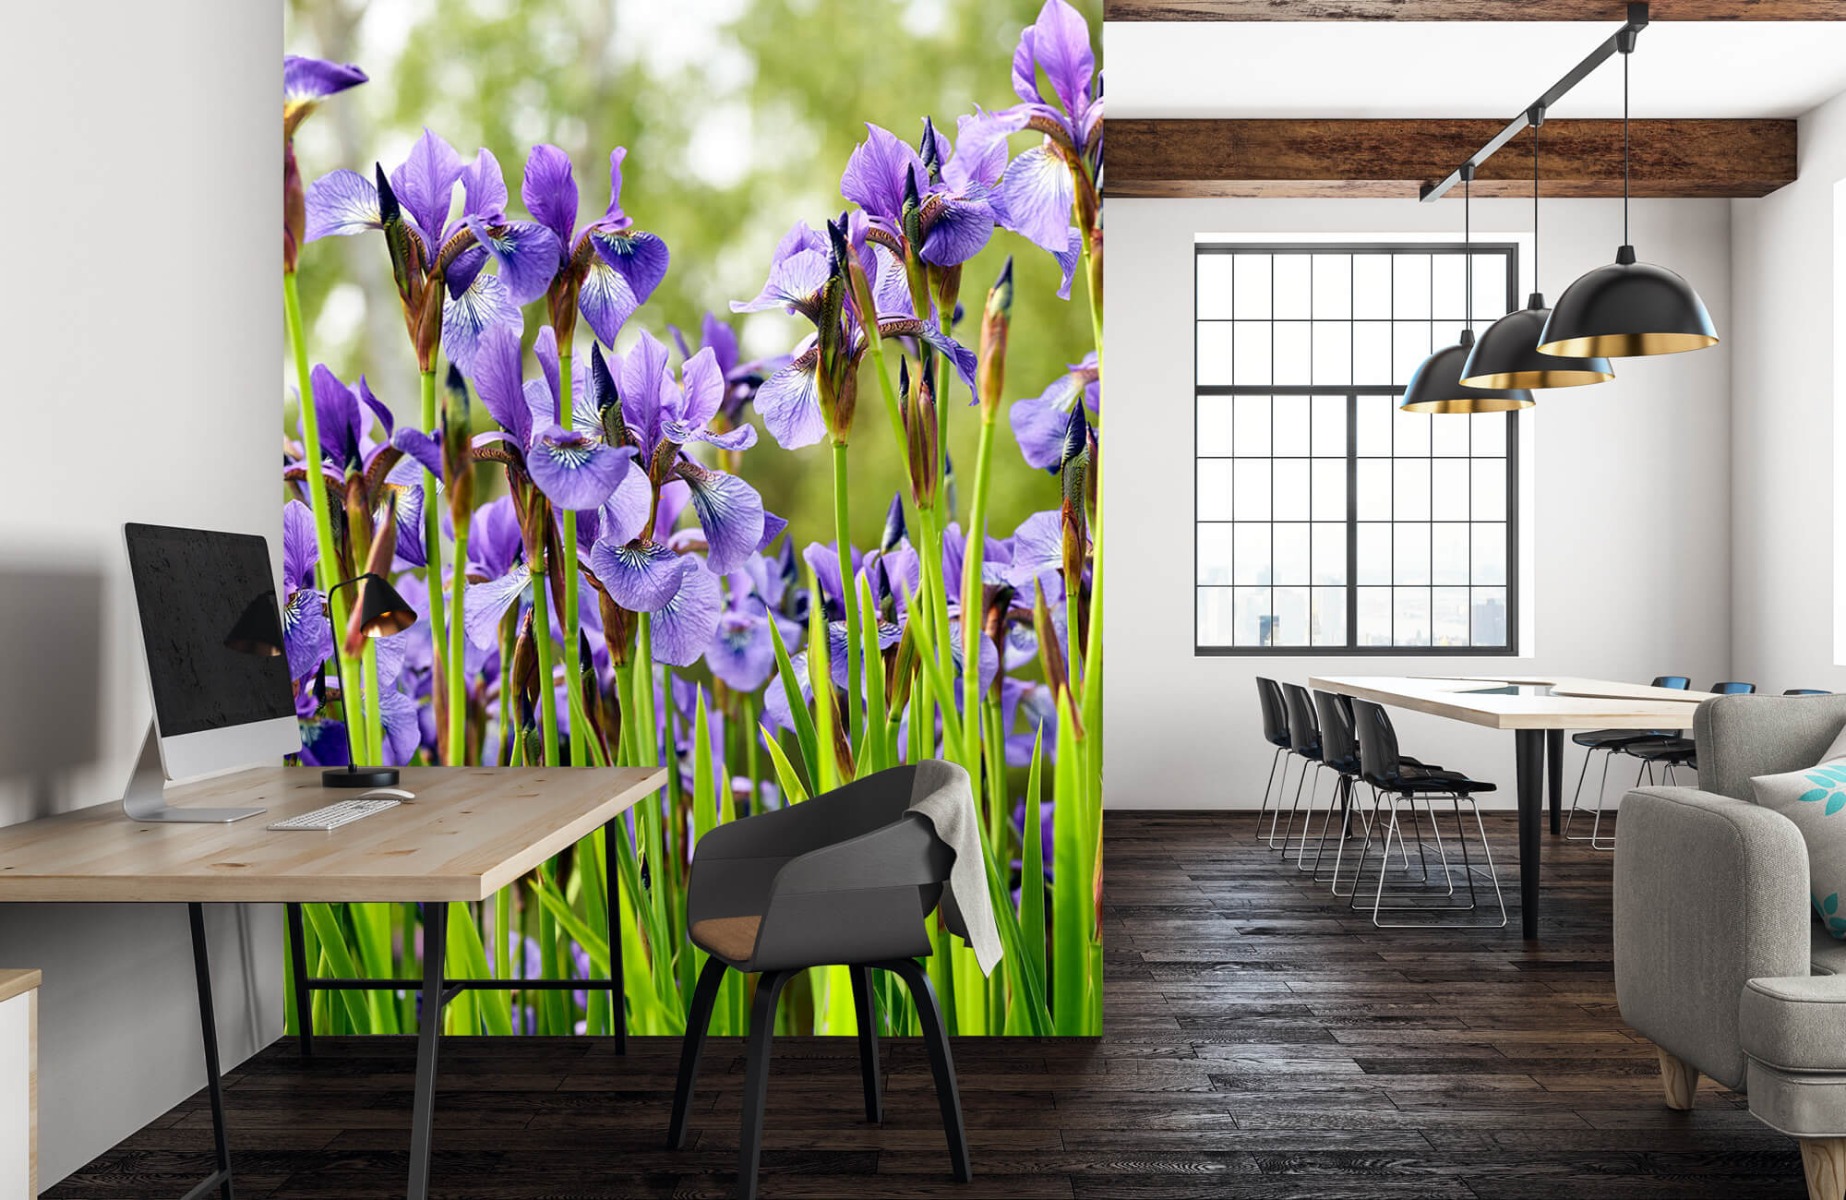 Flower fields - Irises  - Bedroom 22